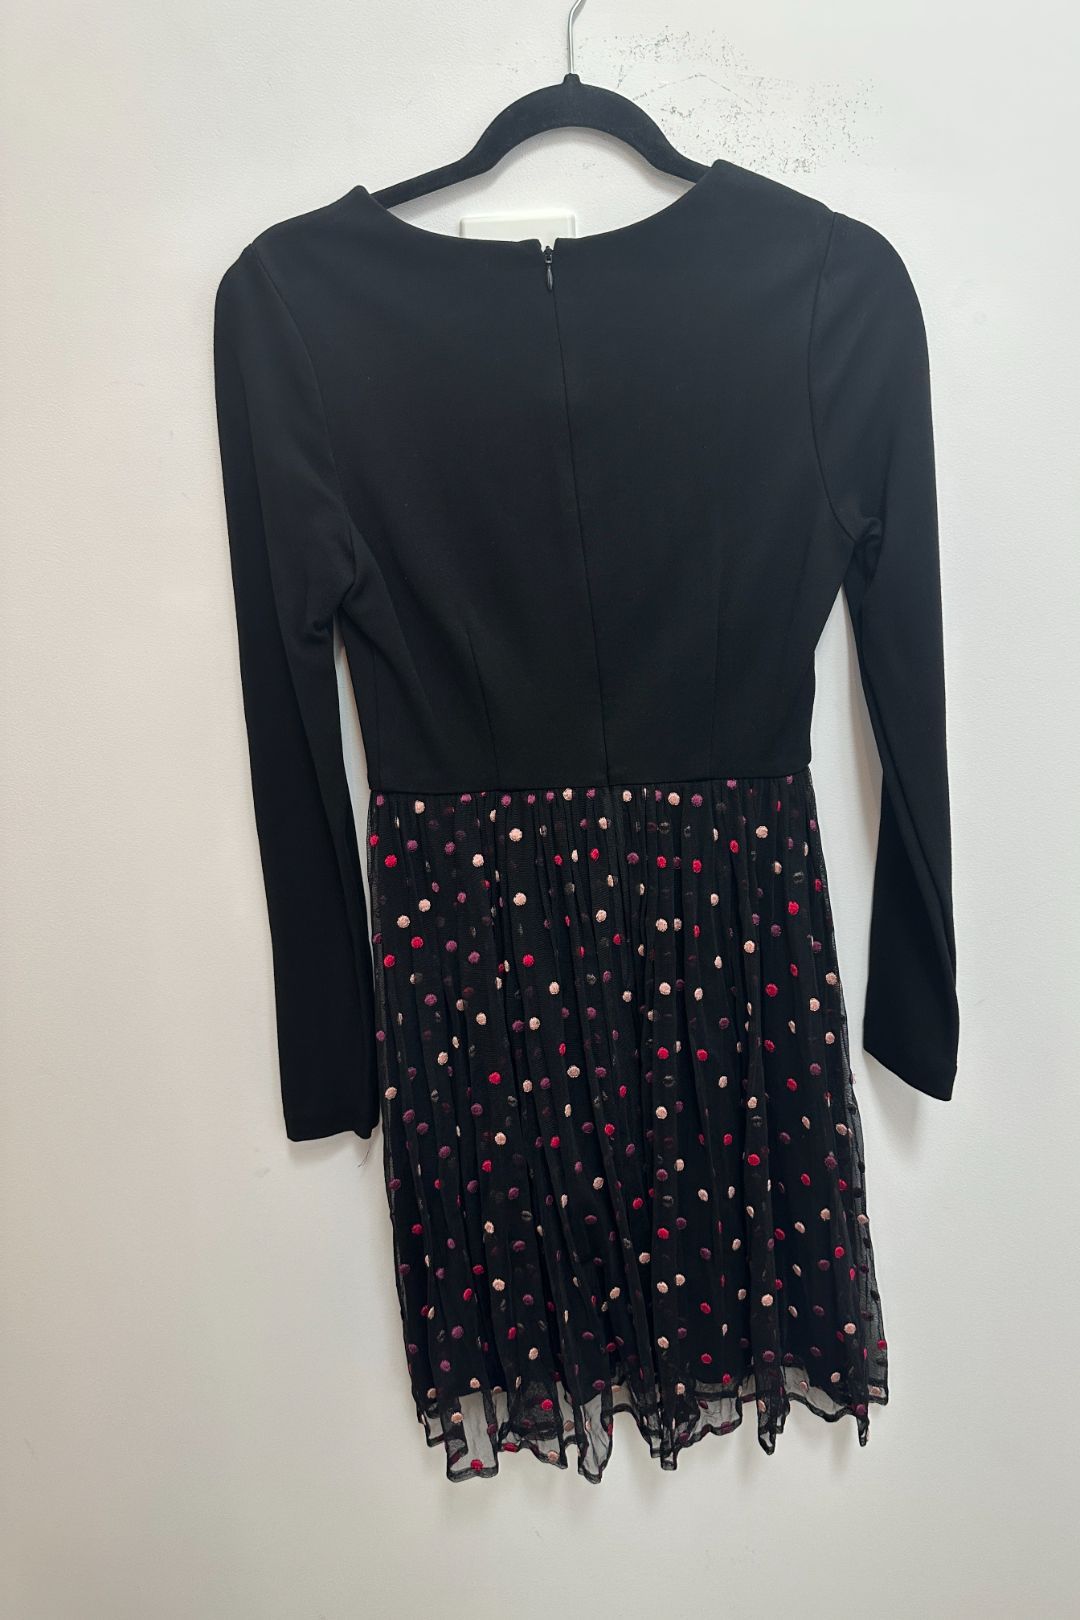 Buy Black Dress with Polka Dot Tulle Skirt, Alannah Hill